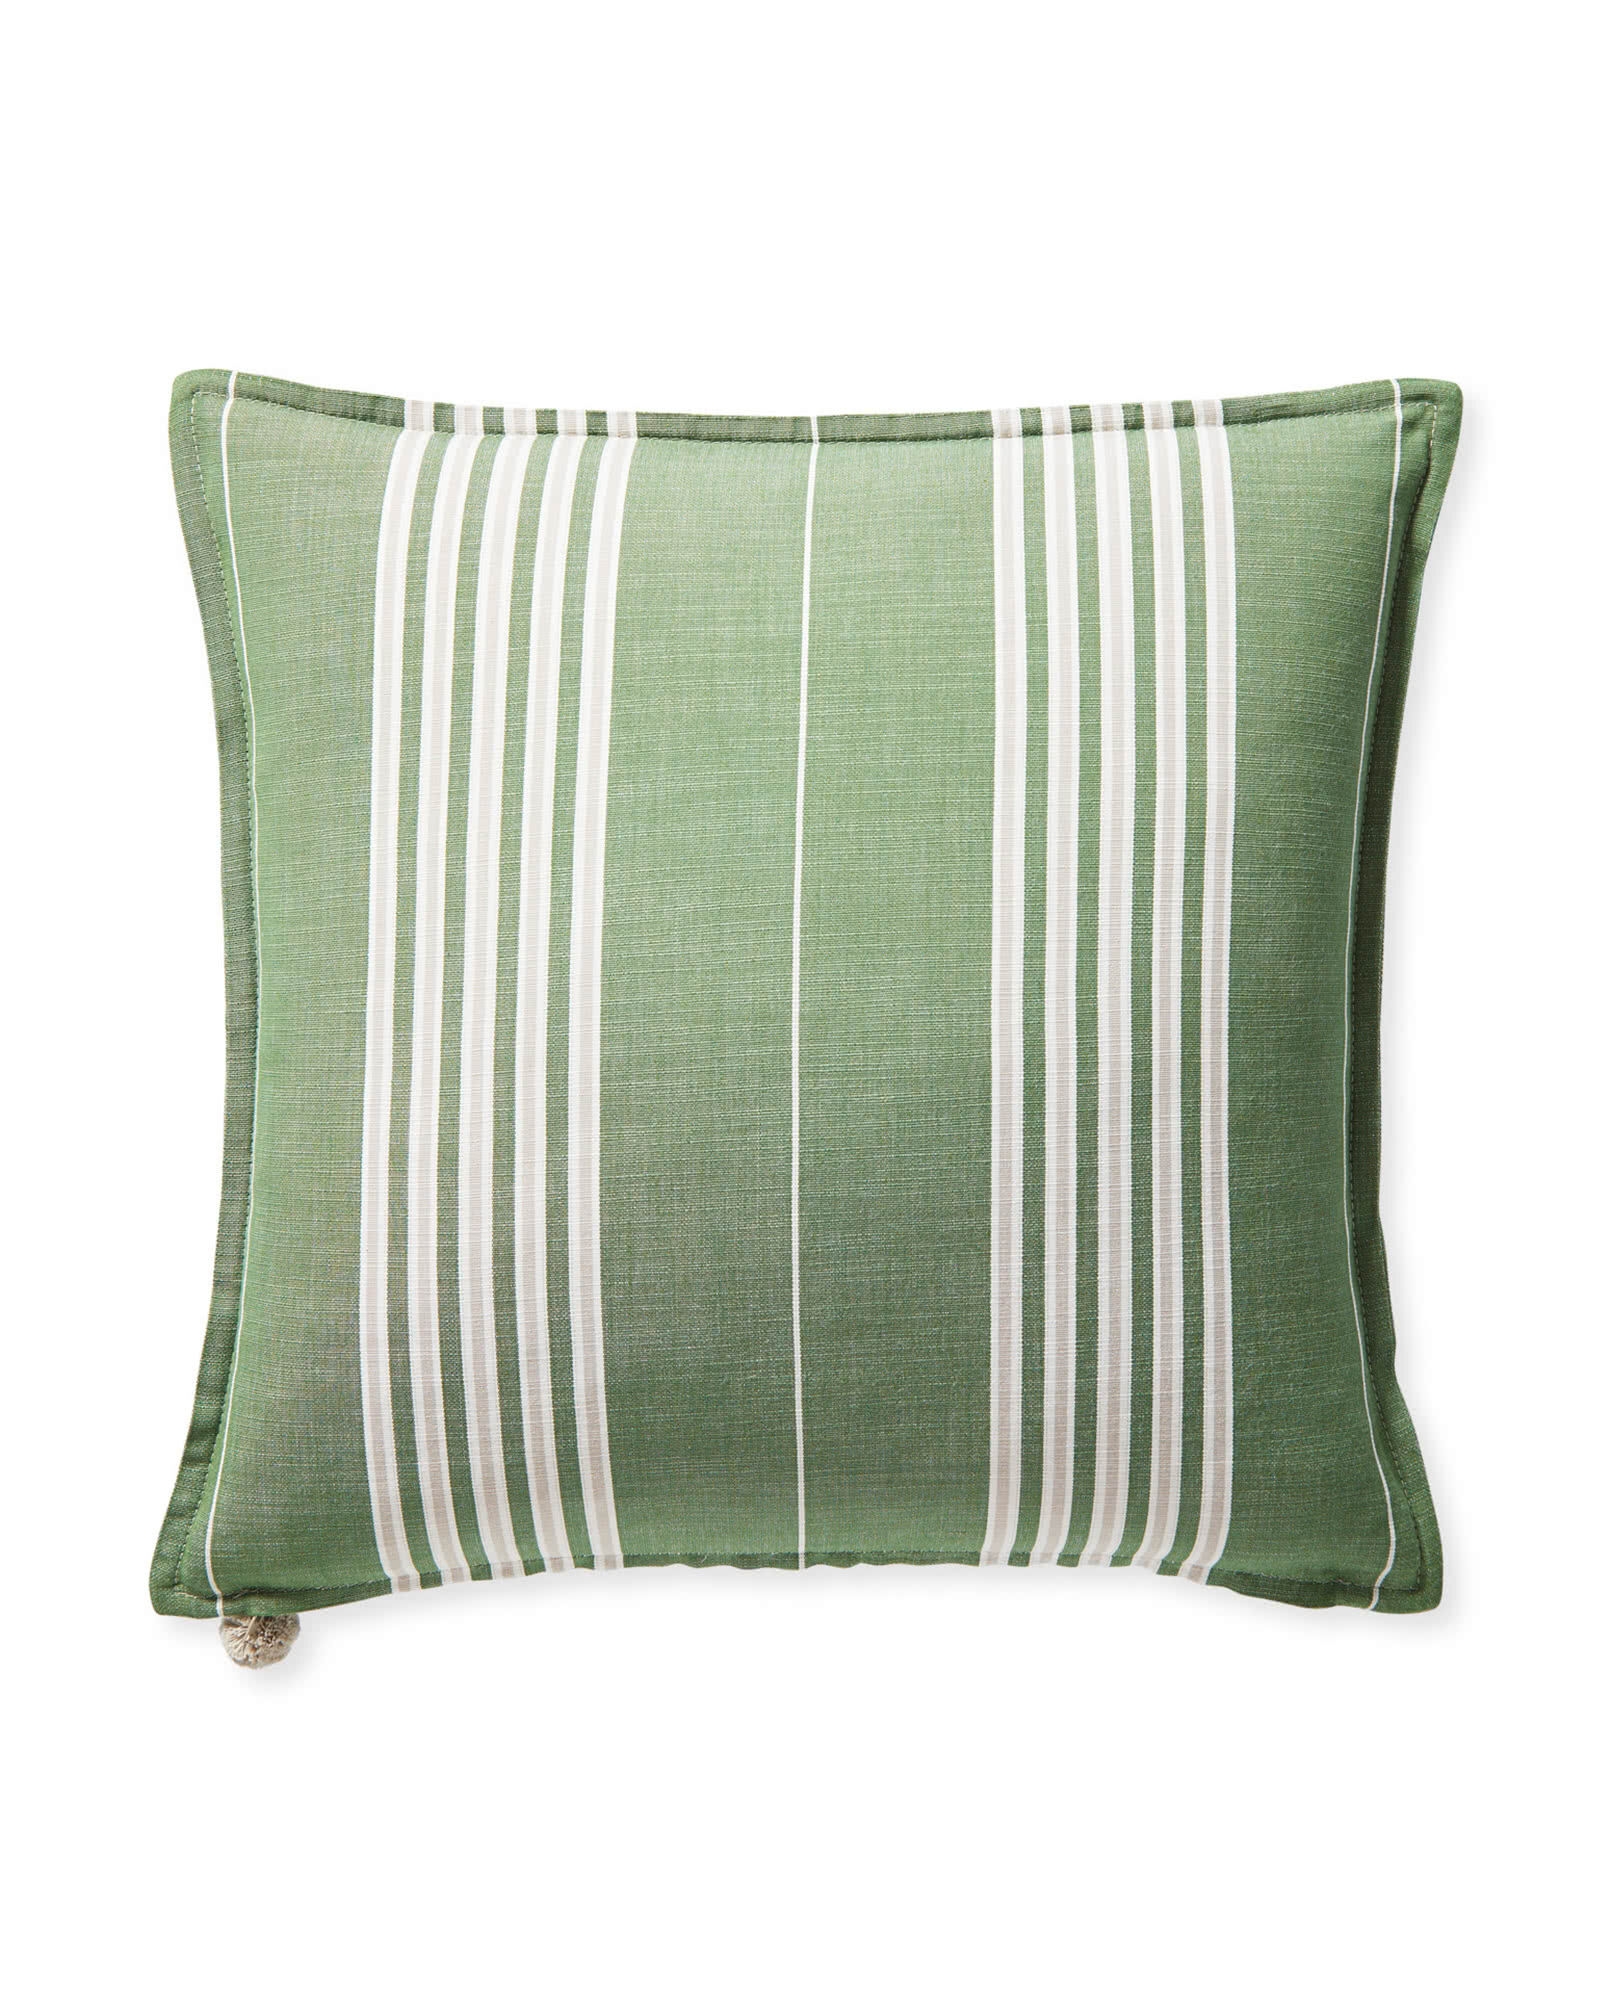 Perennials® Lake Stripe Pillow Cover - Image 0